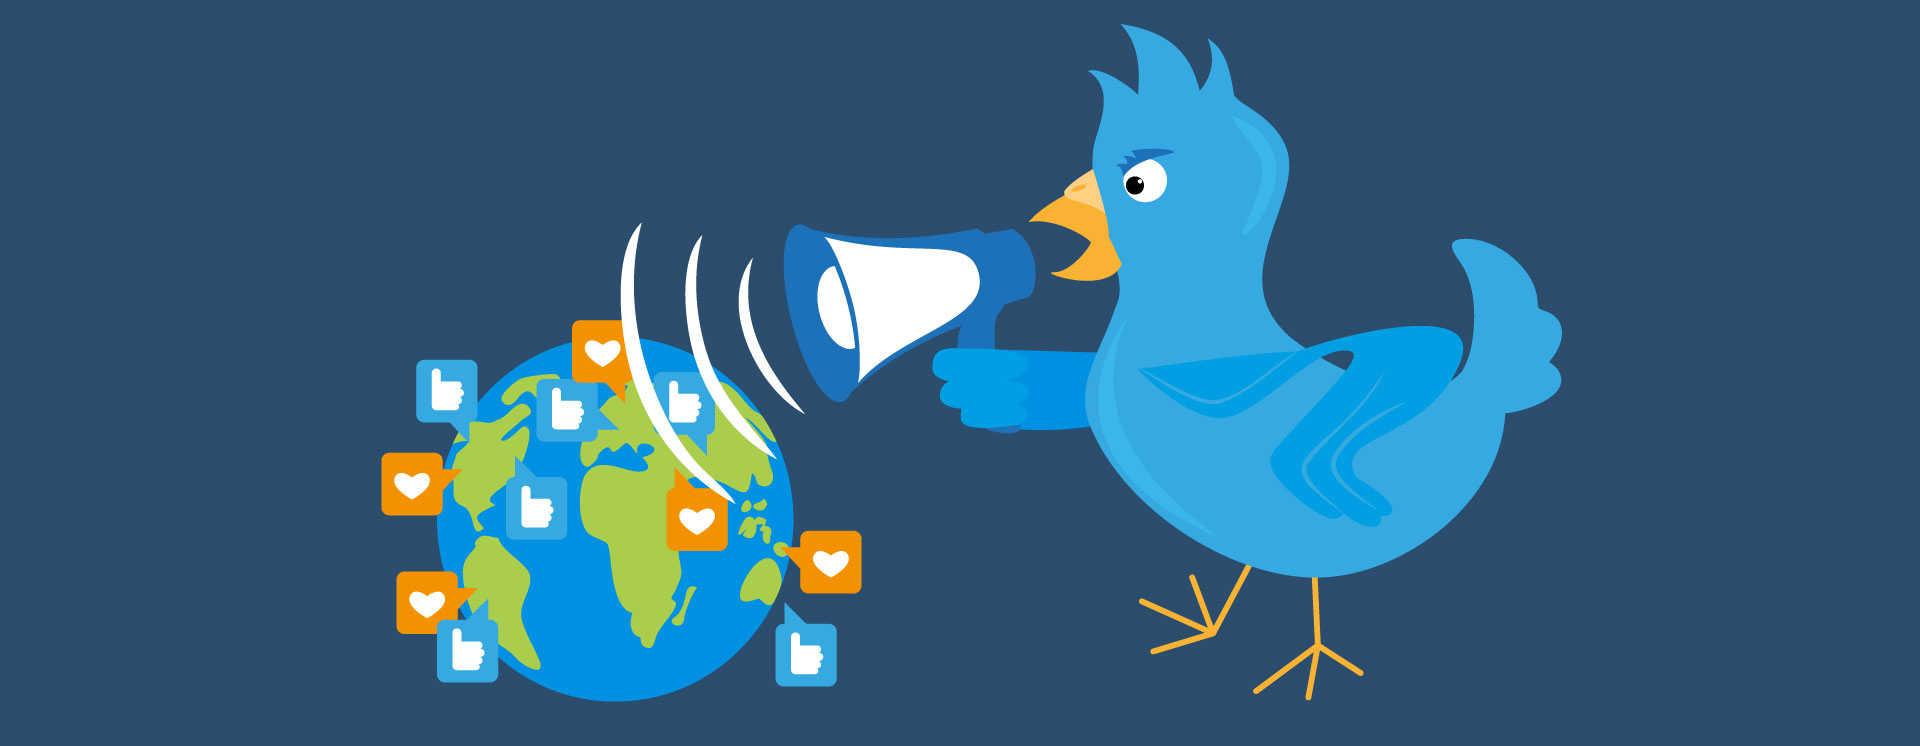 Twitter's API is What's Killing It